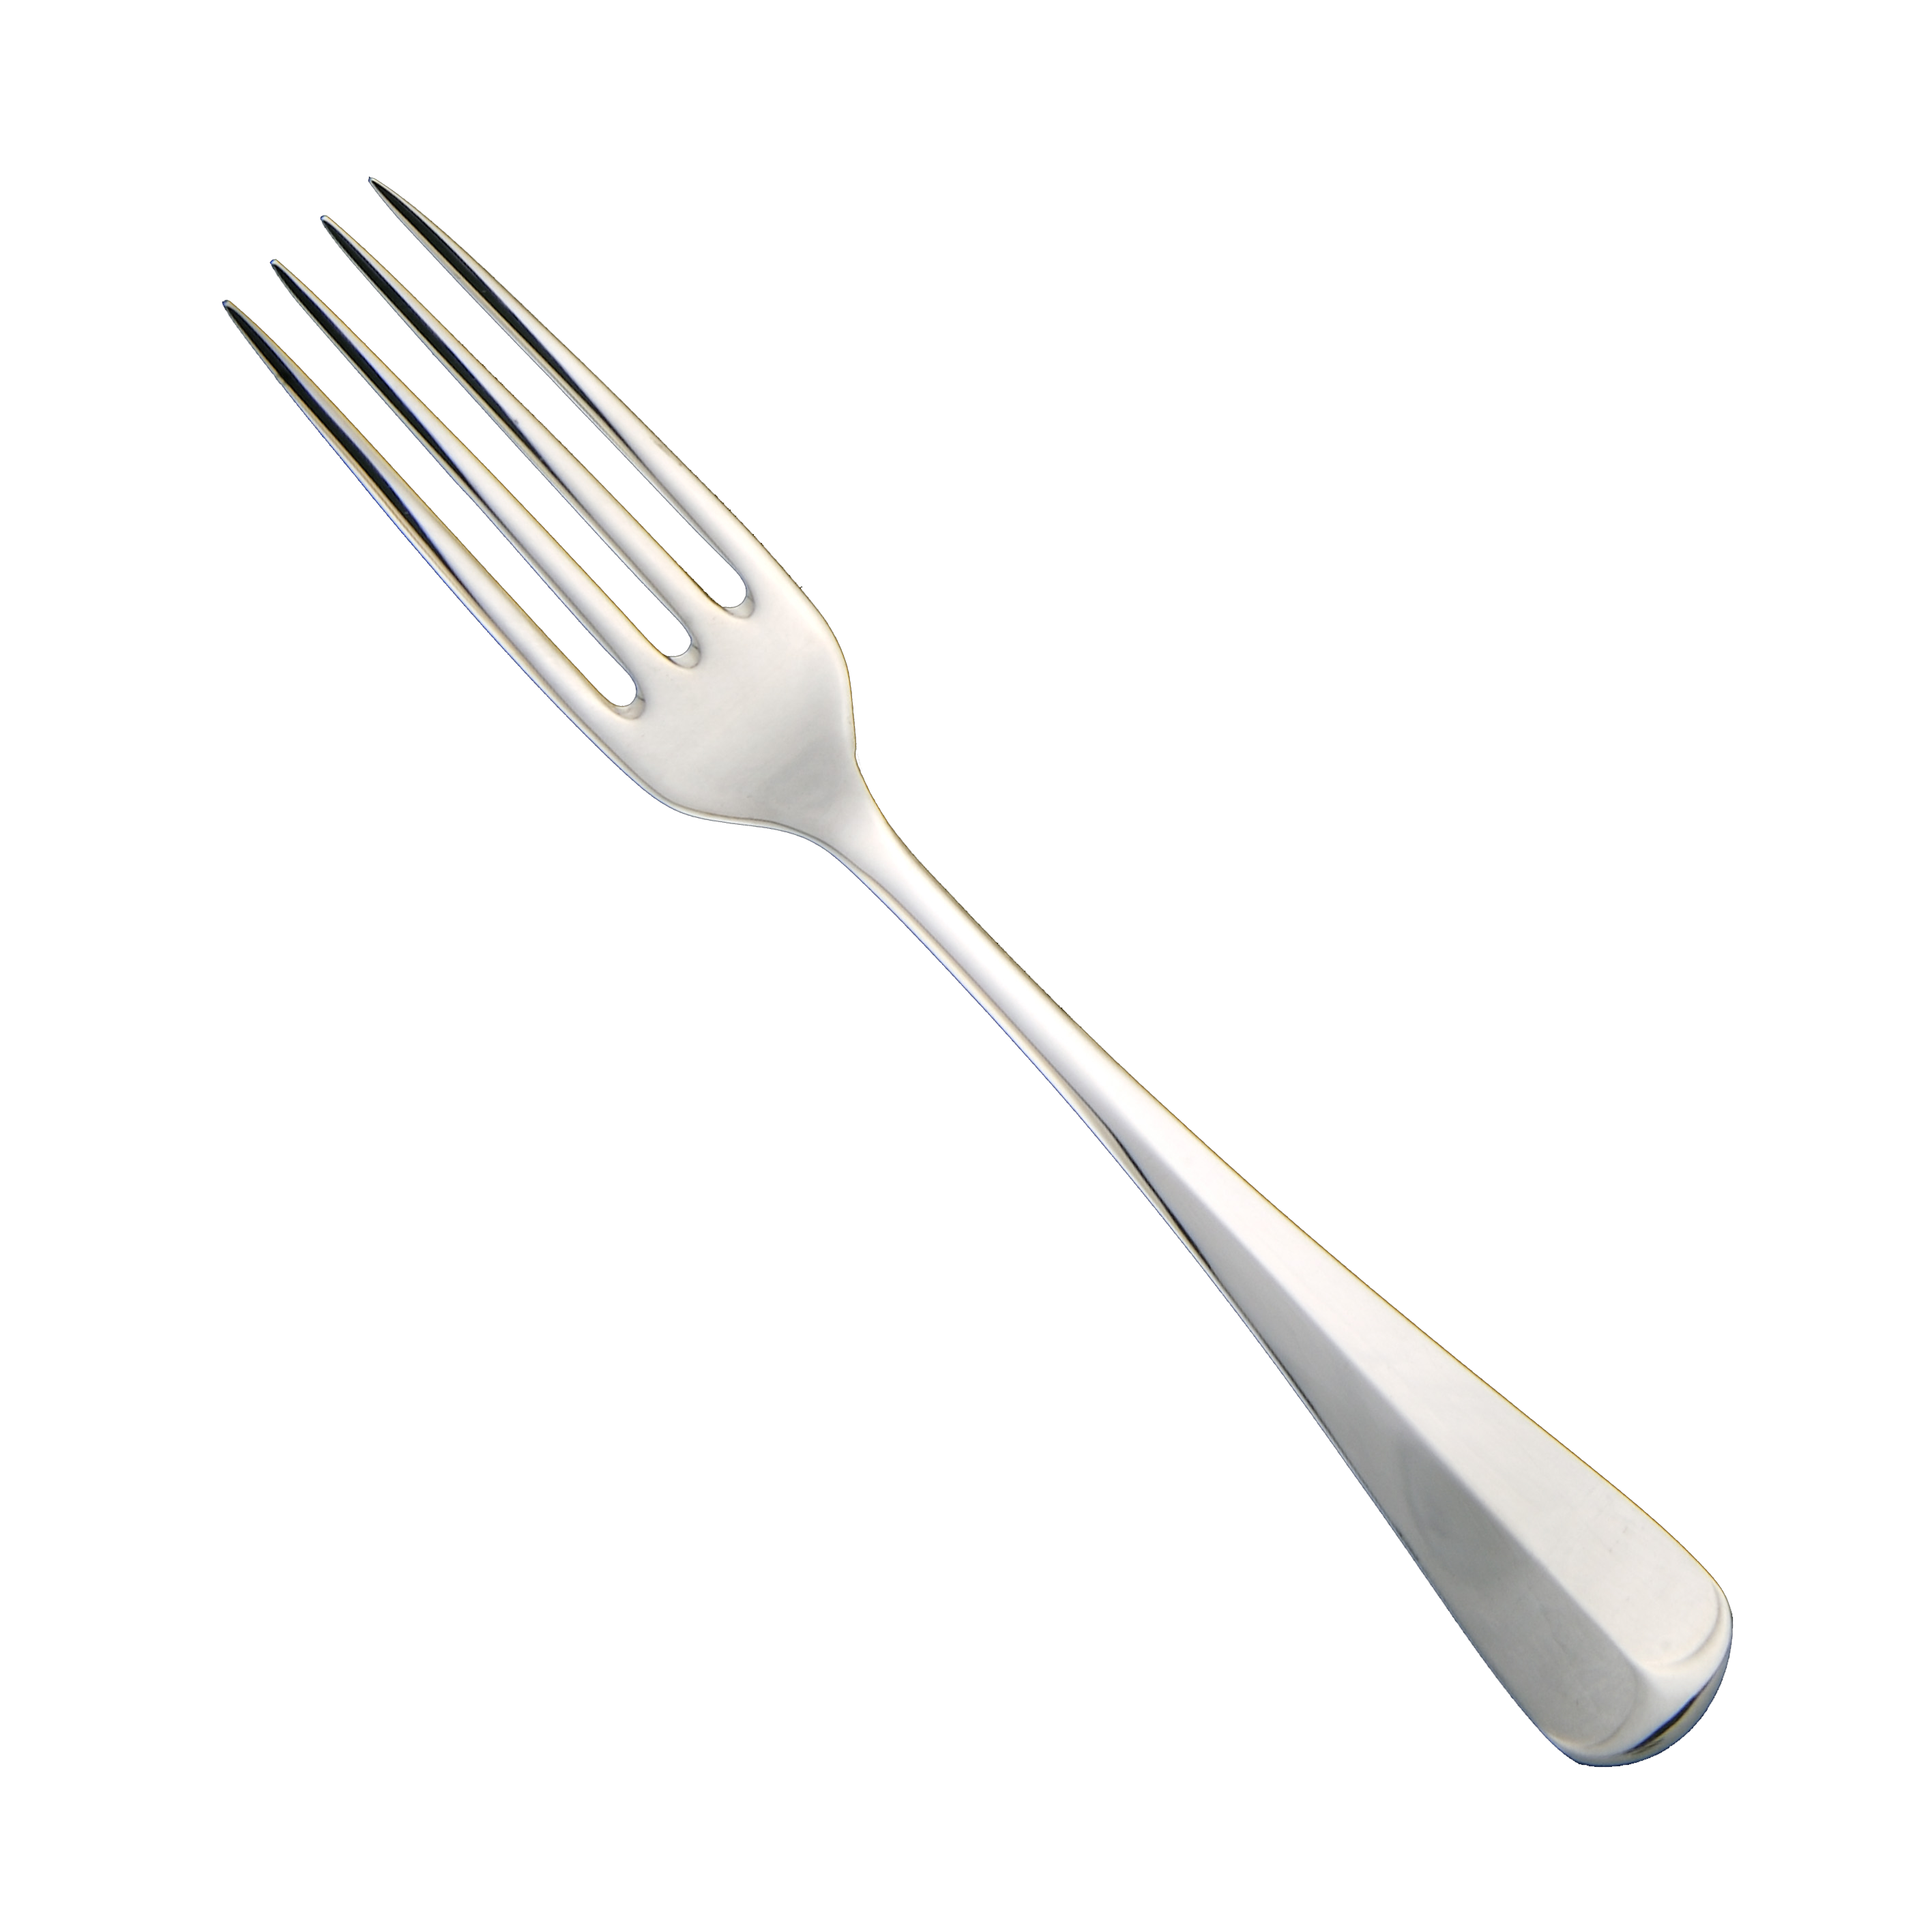 fork png